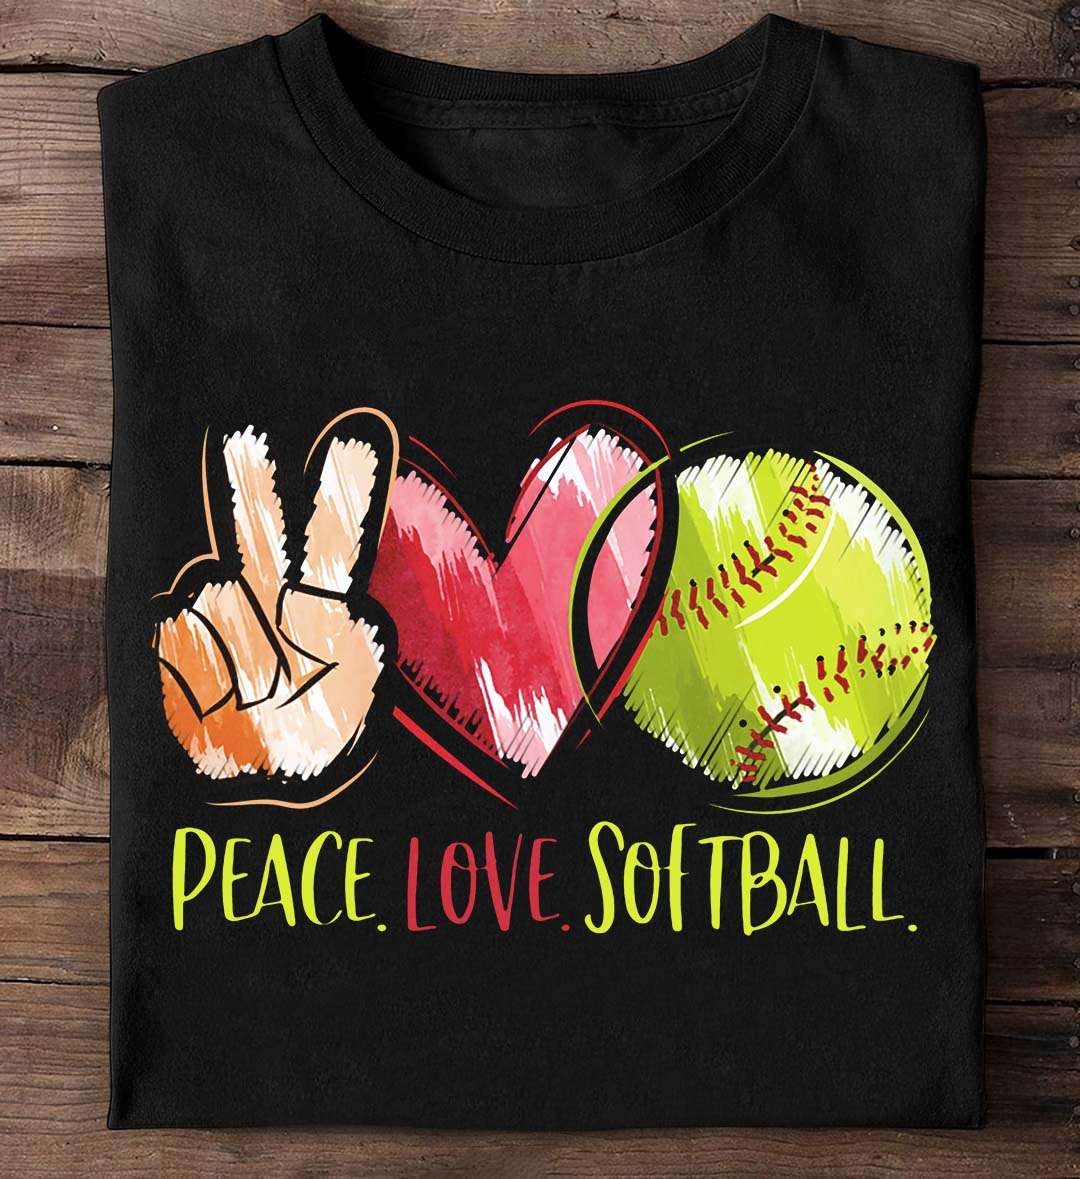 Buy Peace Love Softball Shirt Shirts for Softball Lover Cool